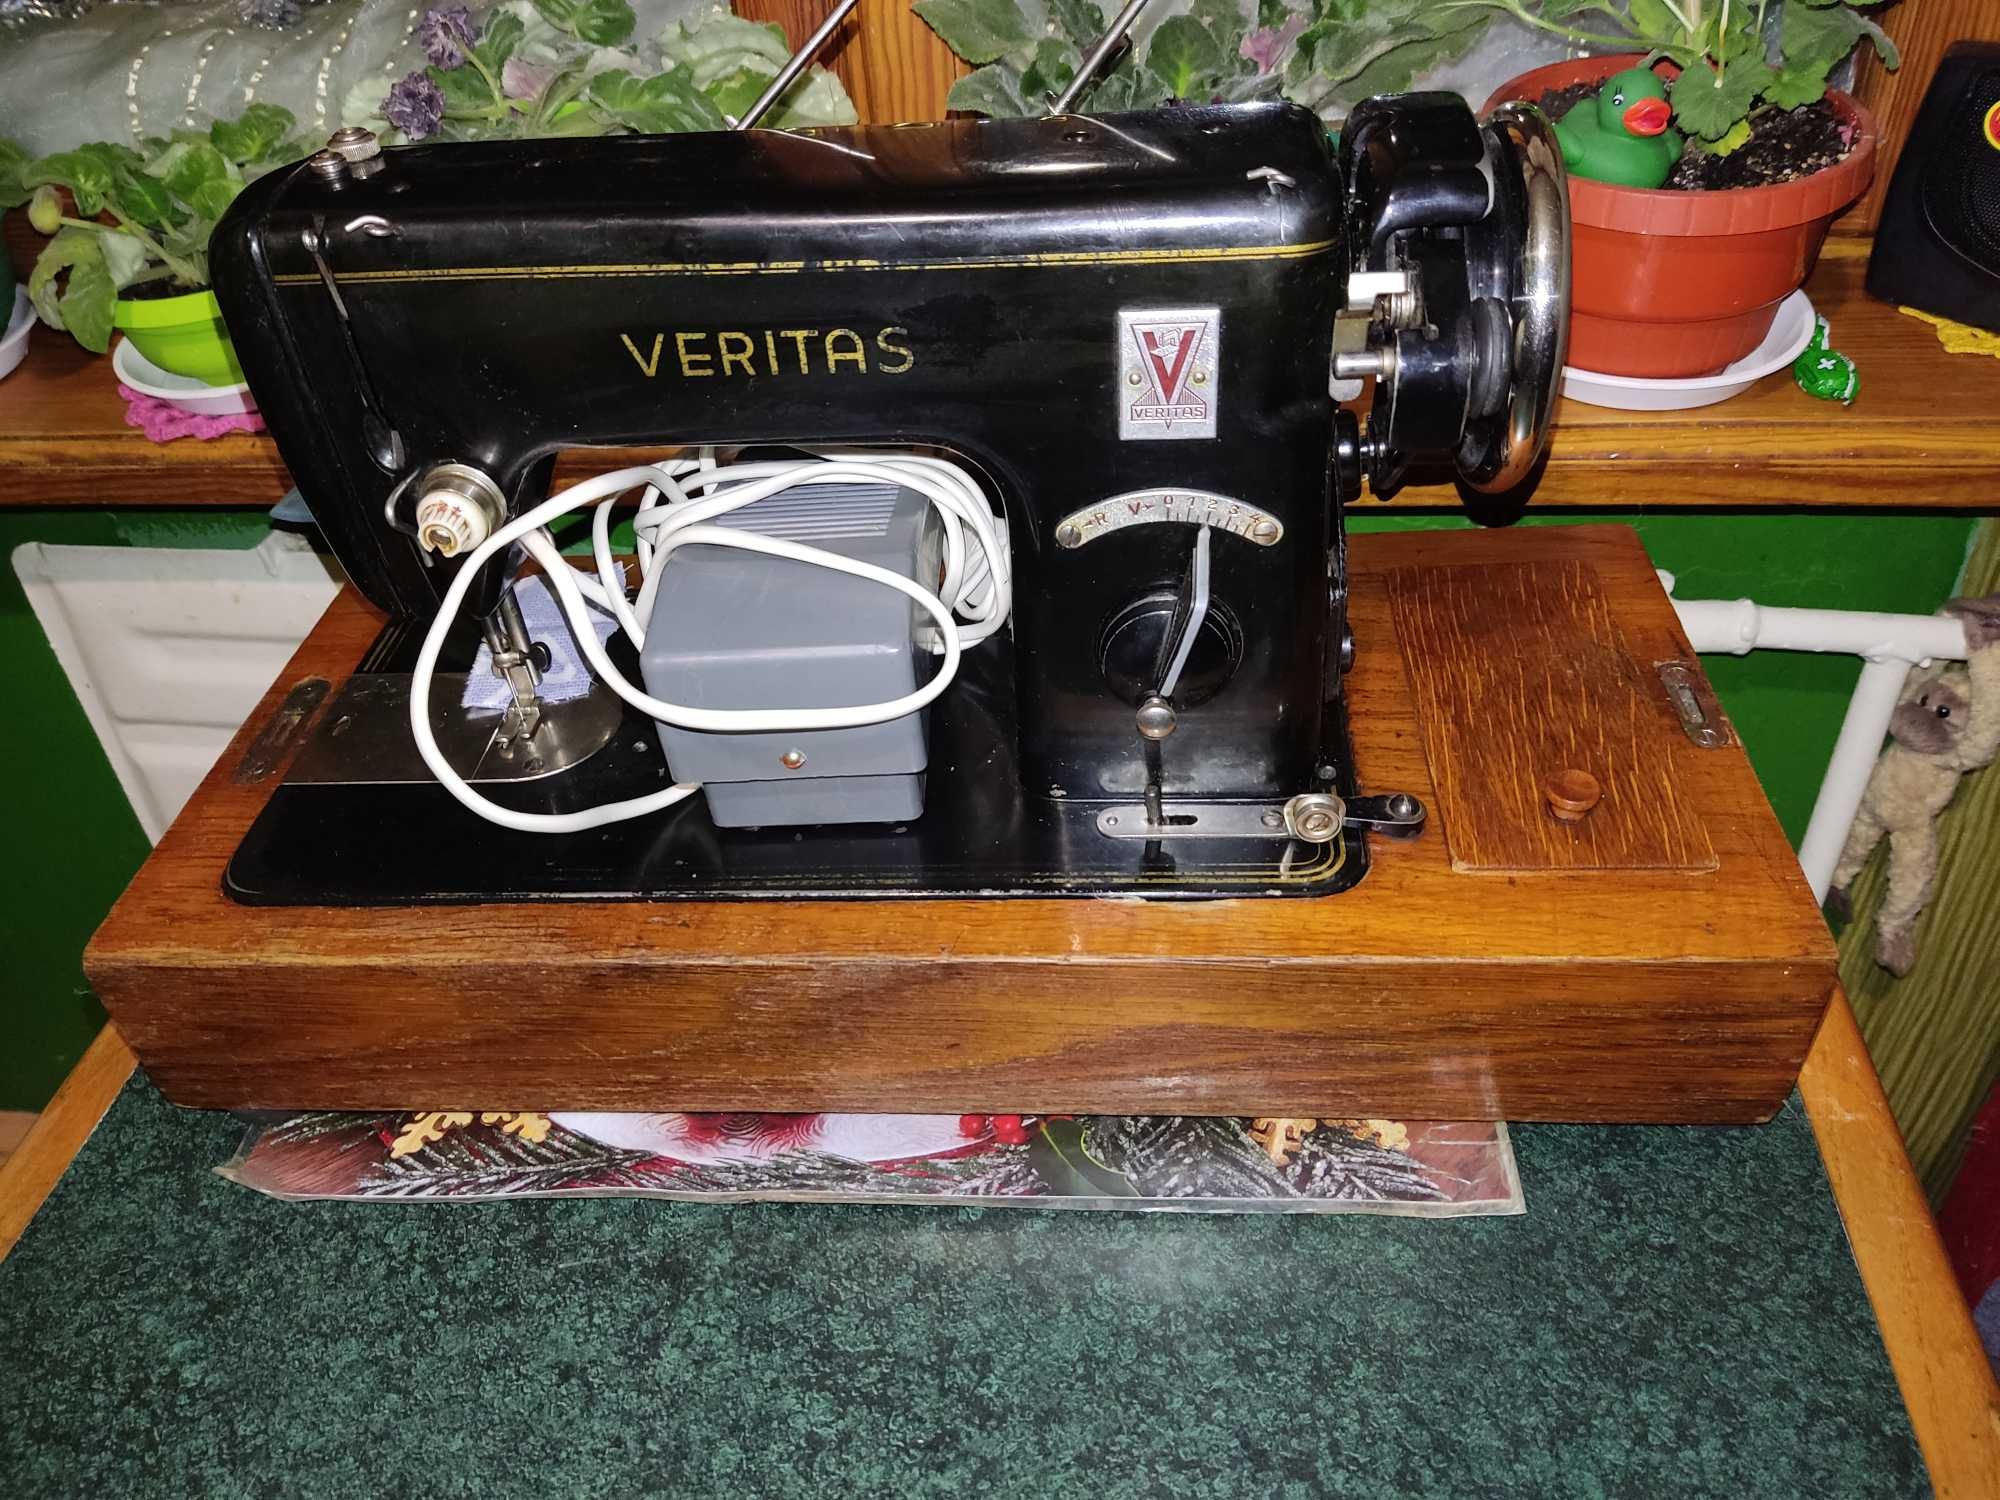 Veritas швейна машинка з електроприводом